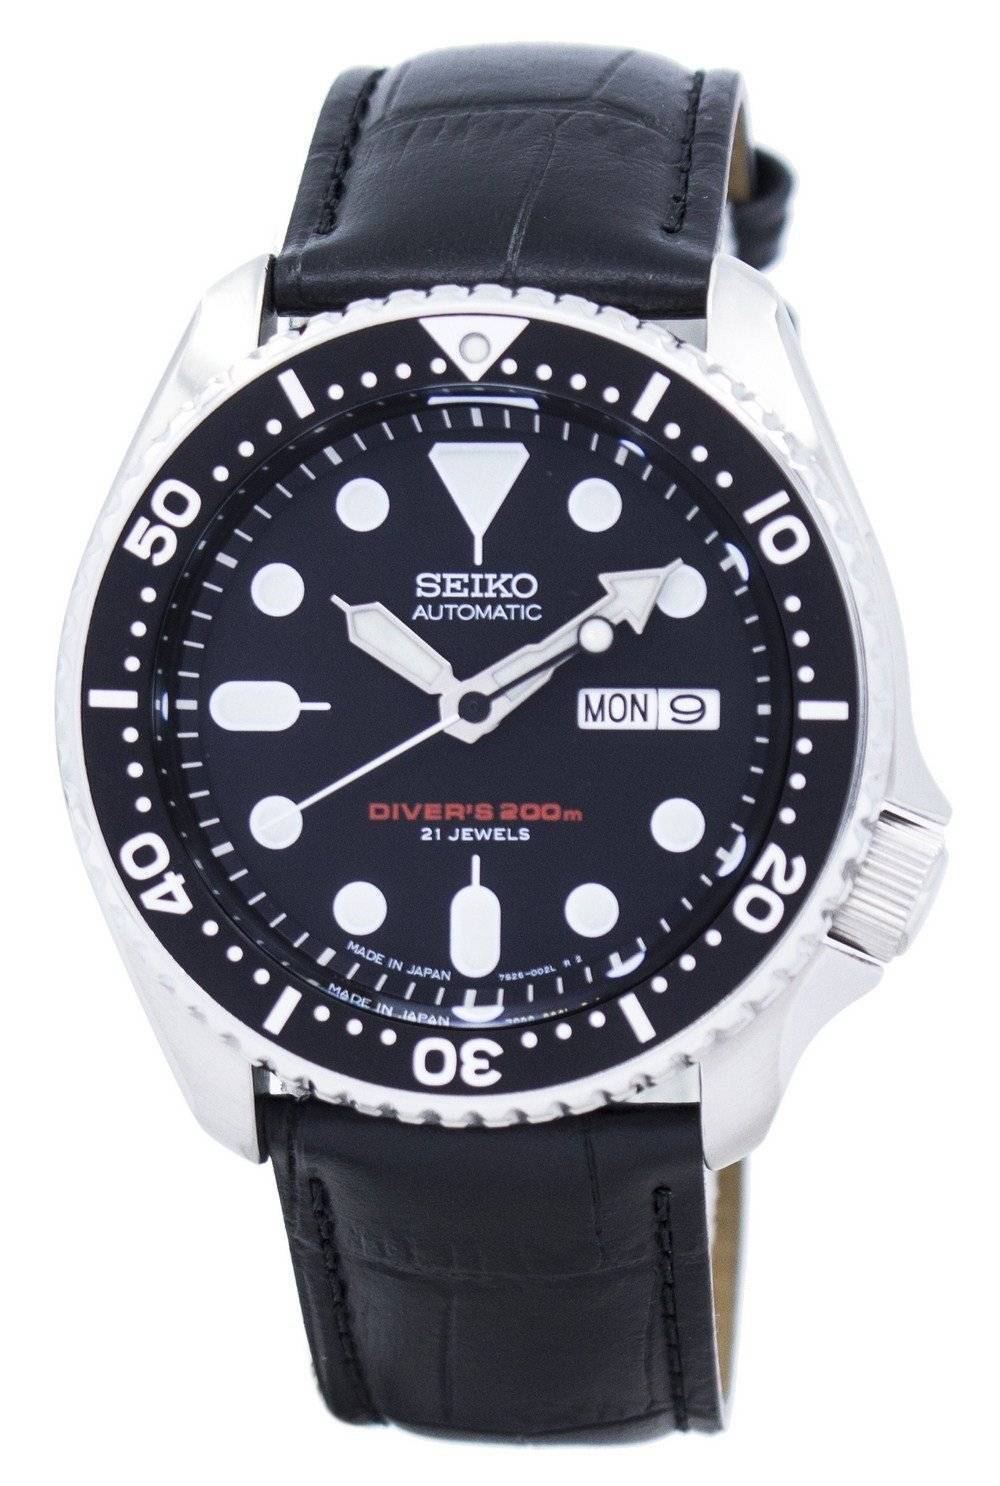 Seiko Diver Watches - Seiko Automatic Diver's, Sports, Chronograph Watch